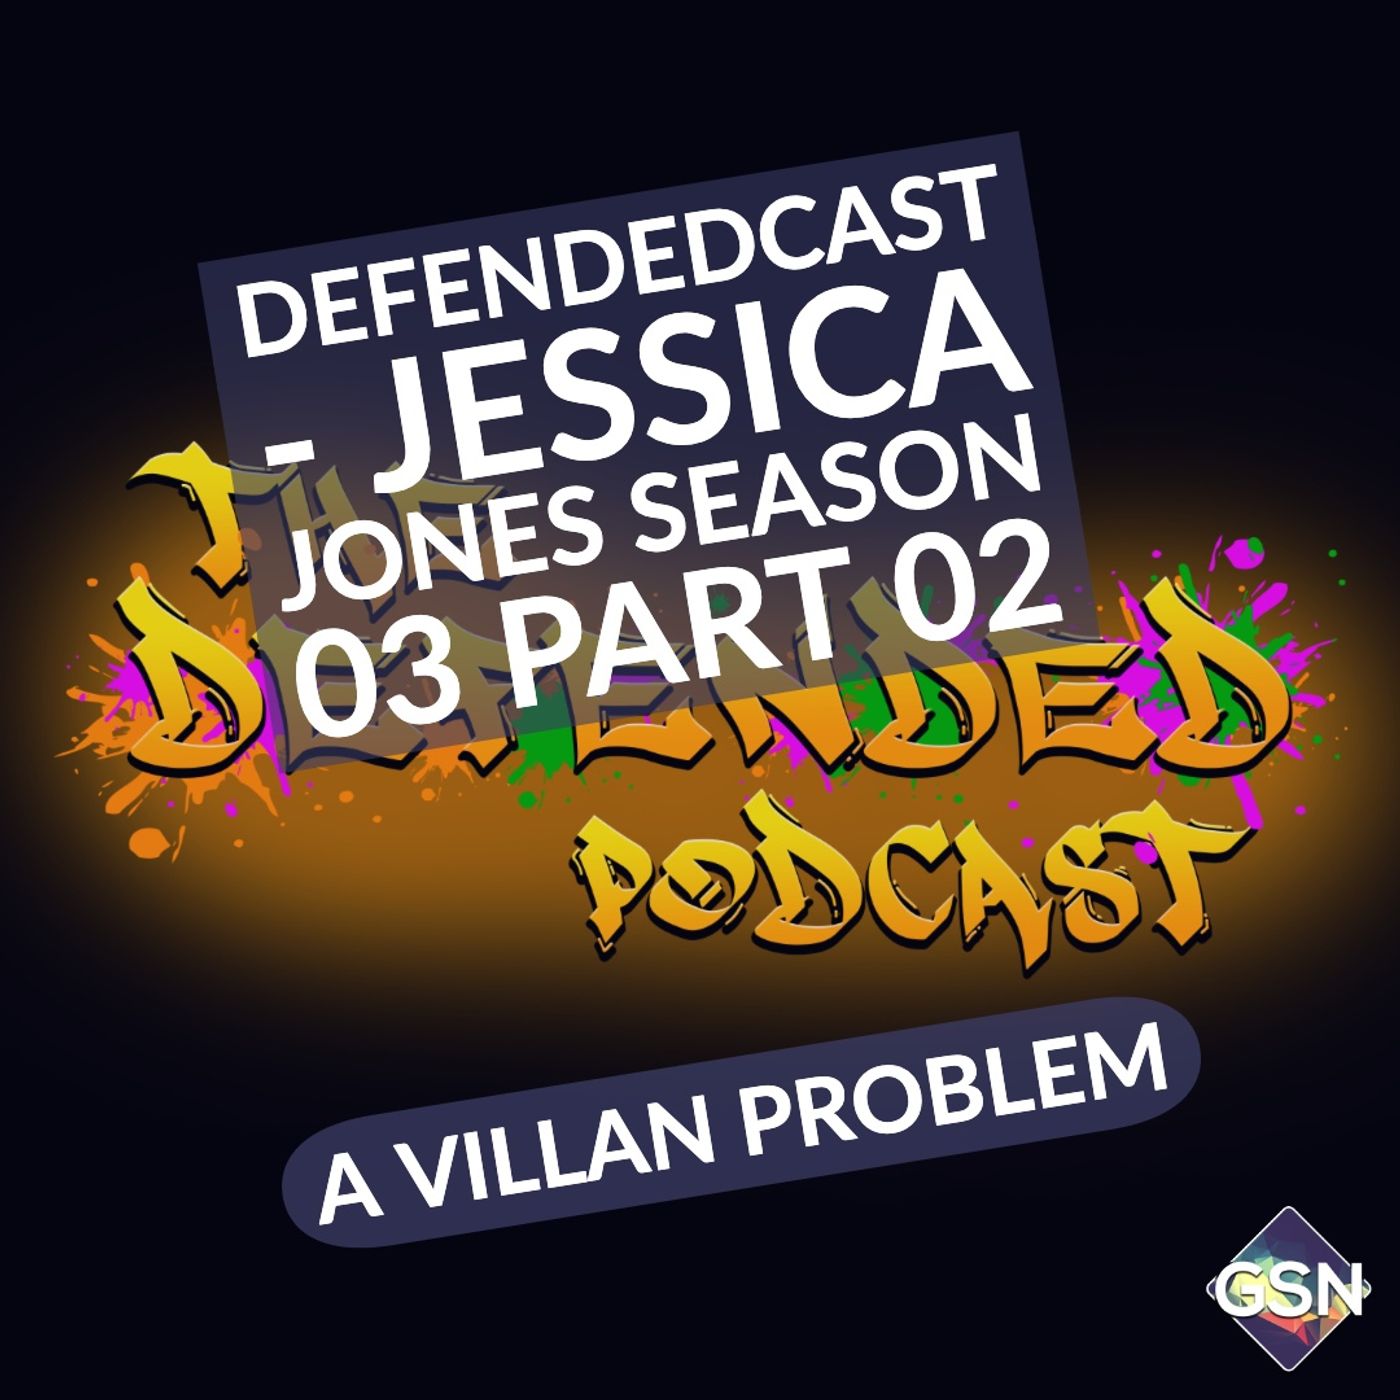 Defendedcast - Jessica Jones Season 03 Part 02